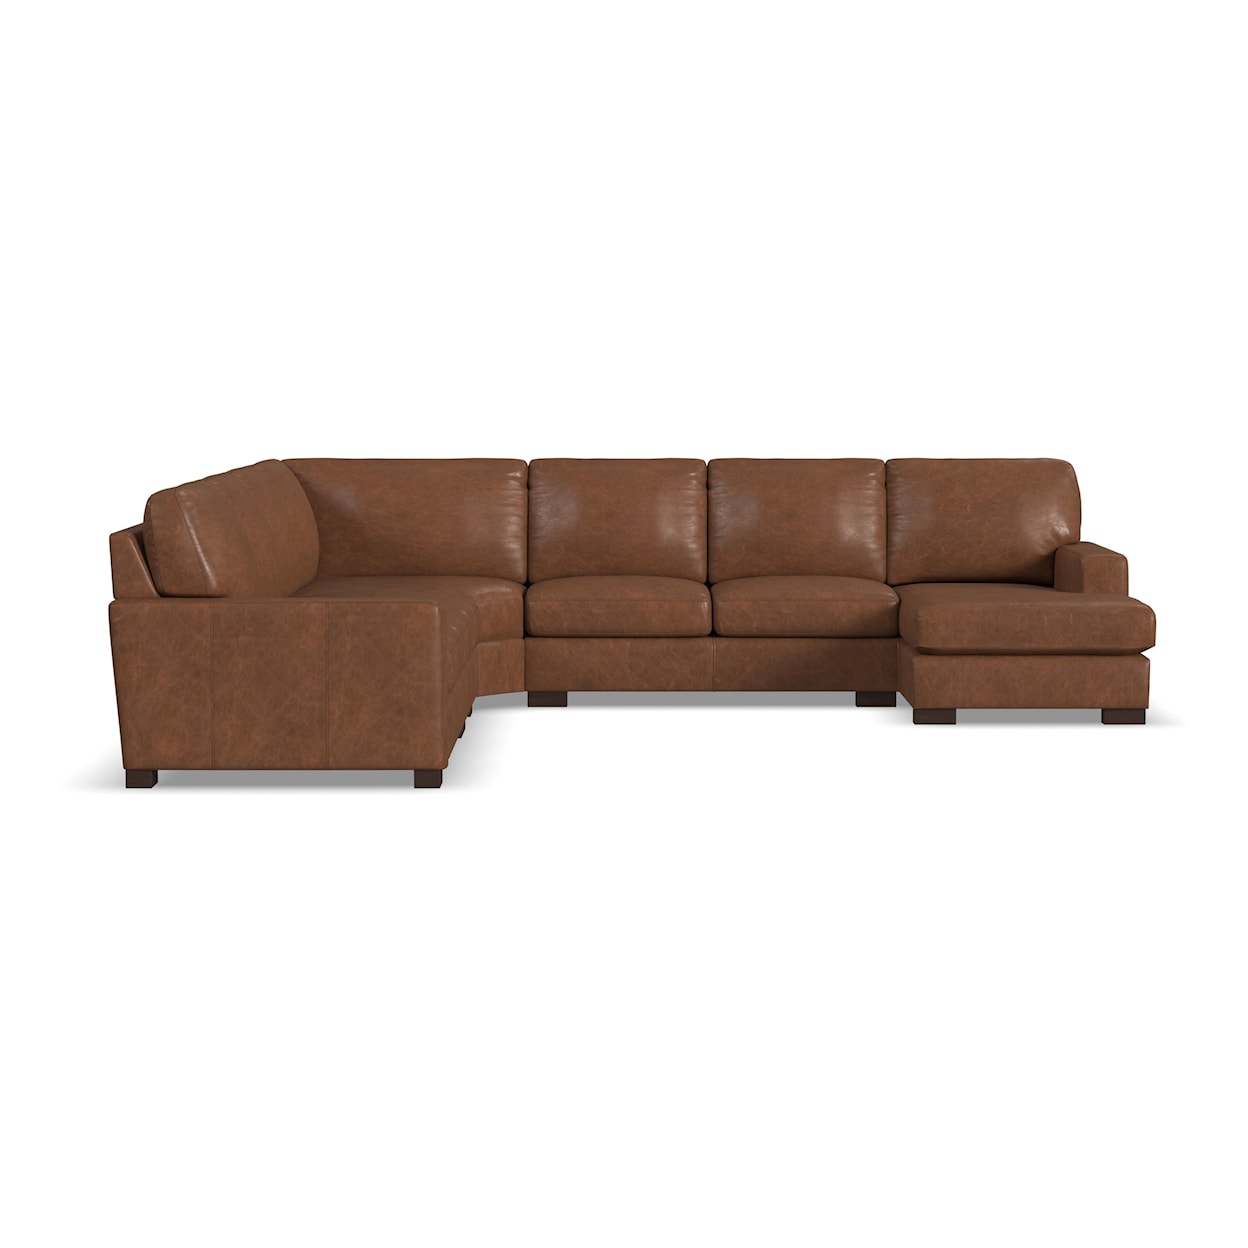 Flexsteel Endurance Sectional Sofa